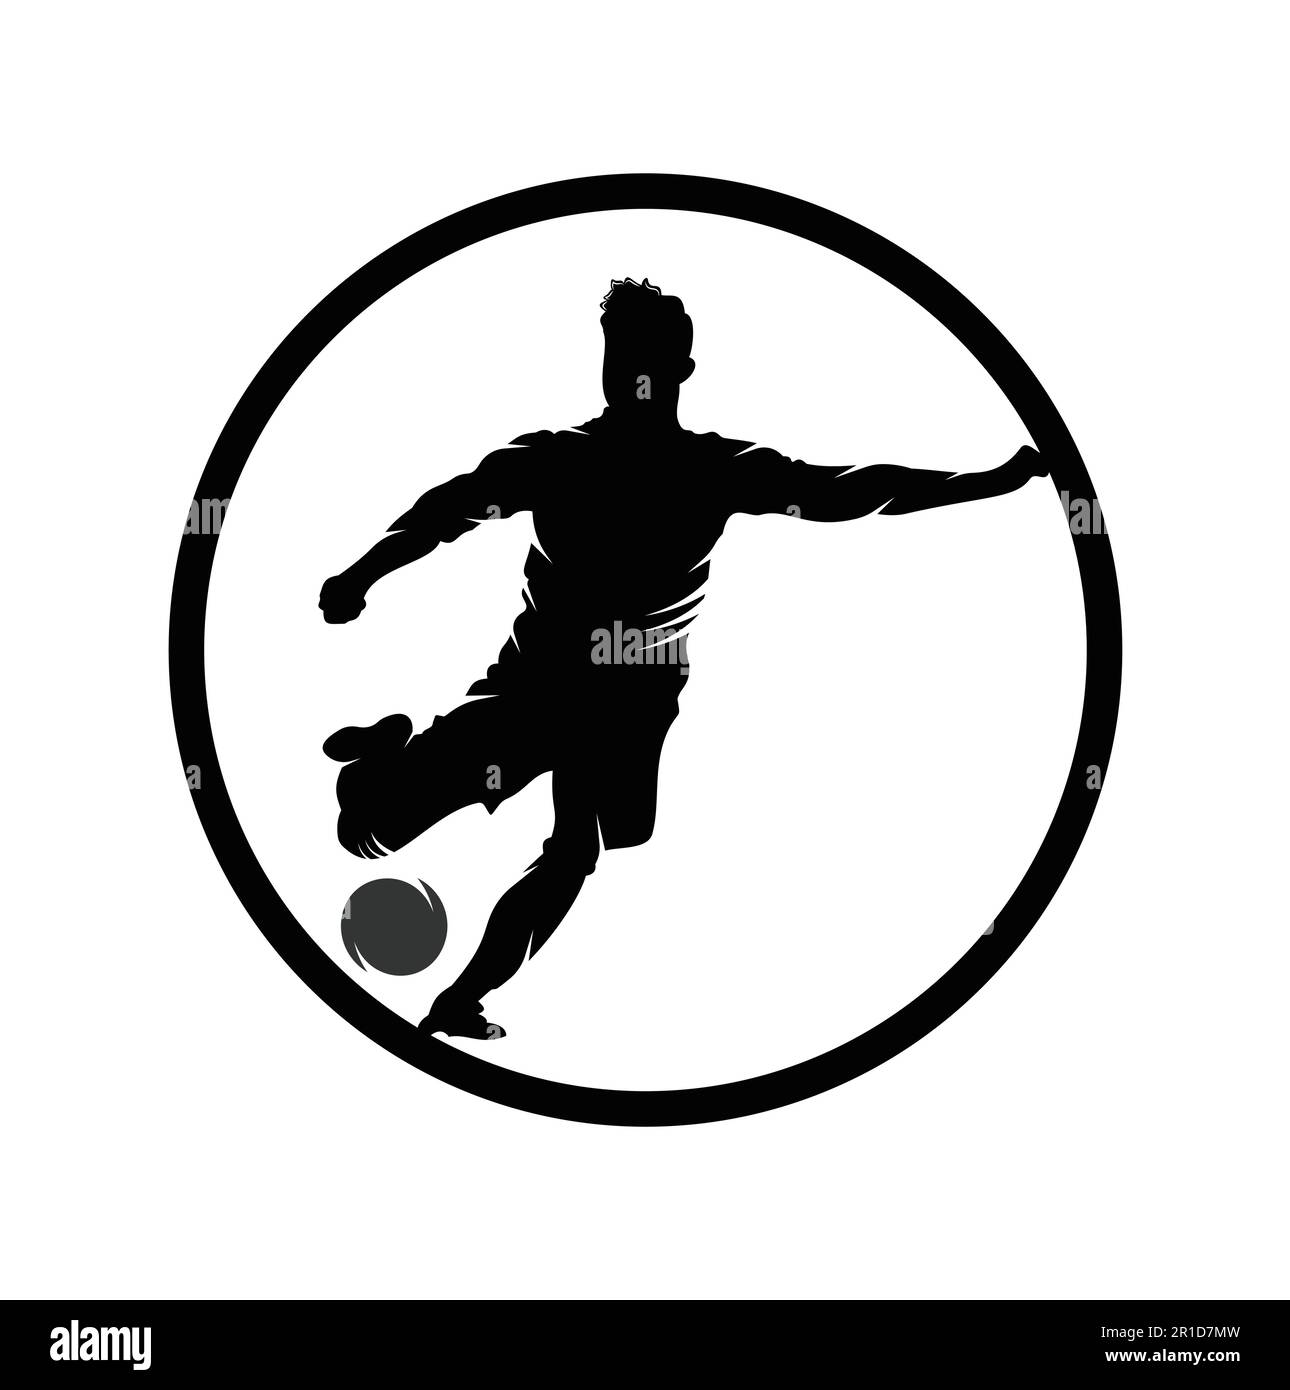 Soccer and Football Player logo design. Dribbling ball logo vector icon ...